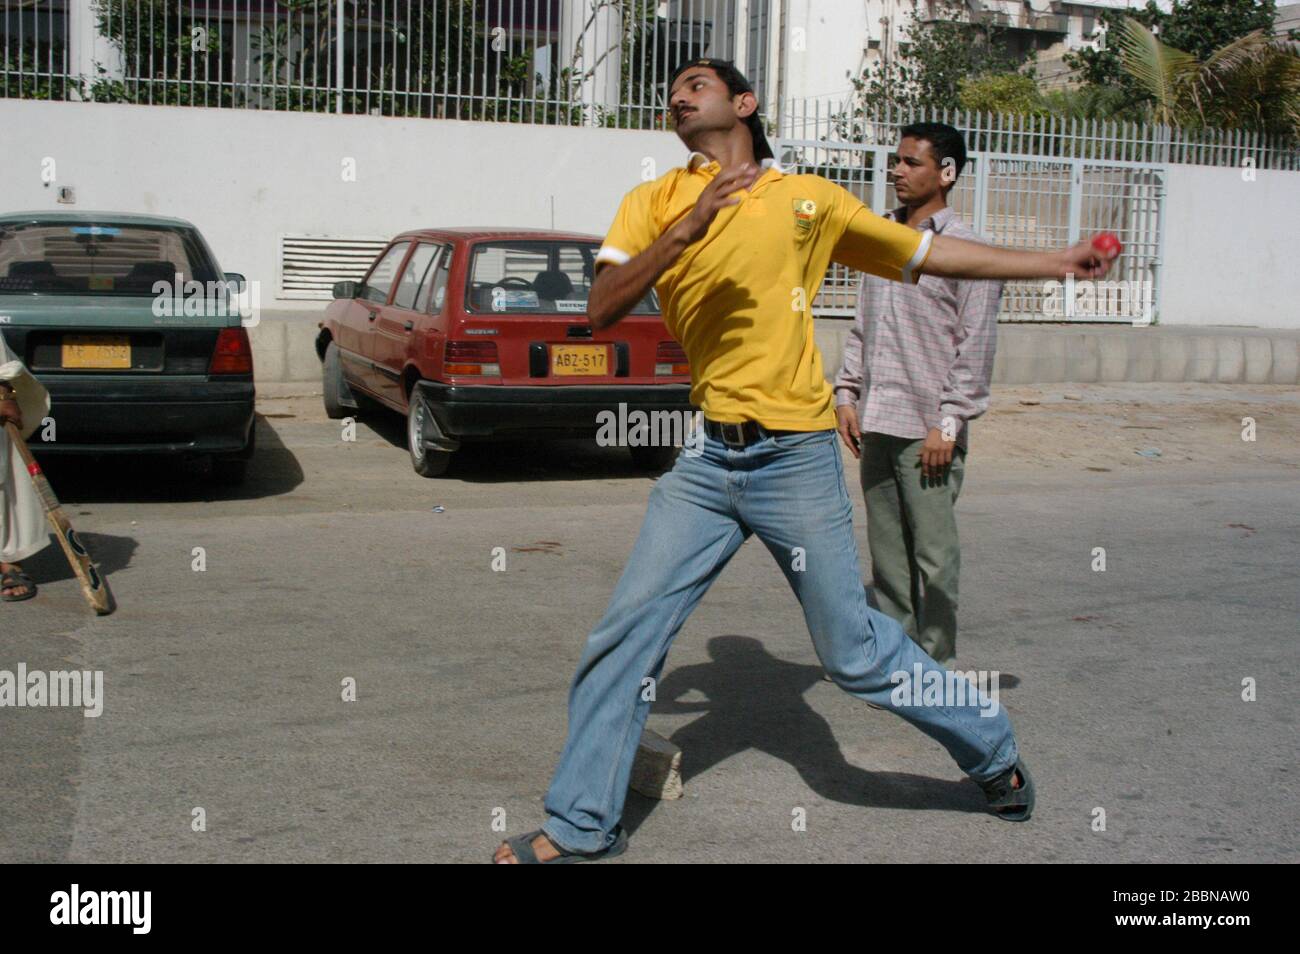 Playing cricket in the street, Karachi,Pakistan Stock Photo